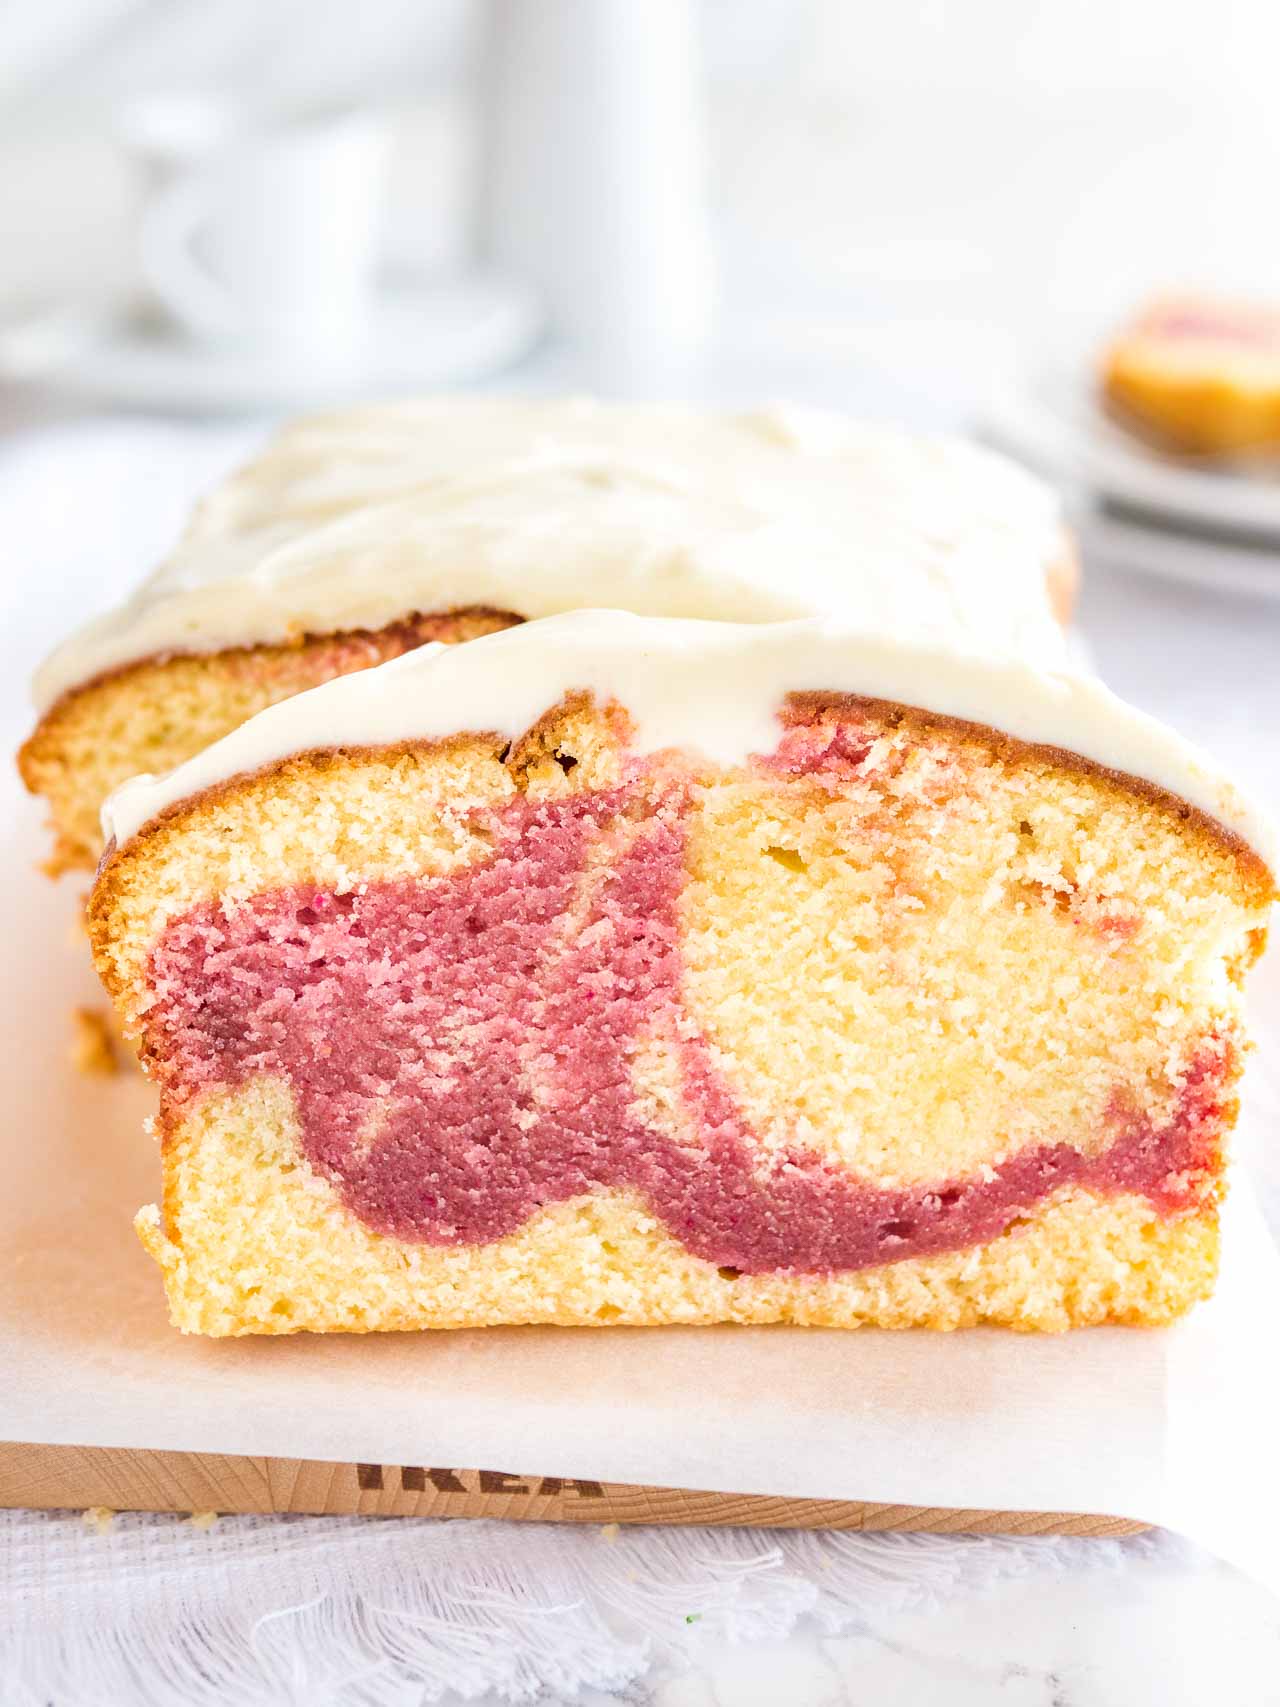 https://platedcravings.com/wp-content/uploads/2016/06/Copycat-Starbucks-Raspberry-Swirl-Pound-Cake-Plated-Cravings-4.jpg